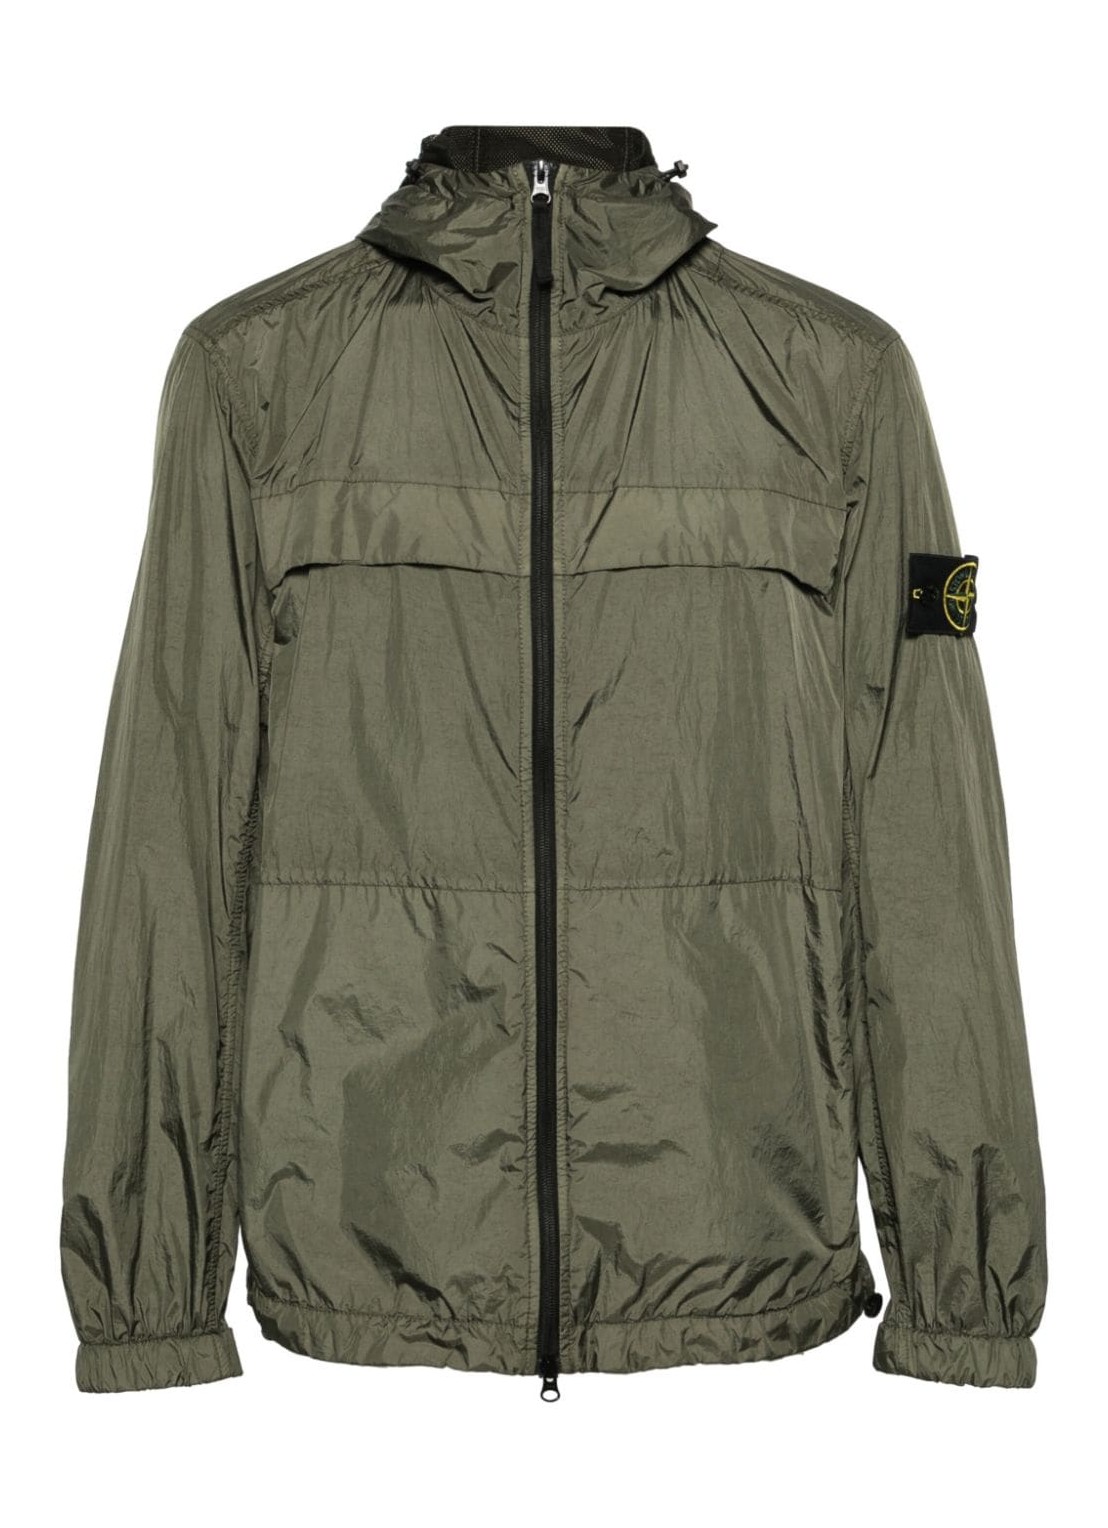 Outerwear stone island outerwear man jacket 801540922 v0059 talla XXL
 